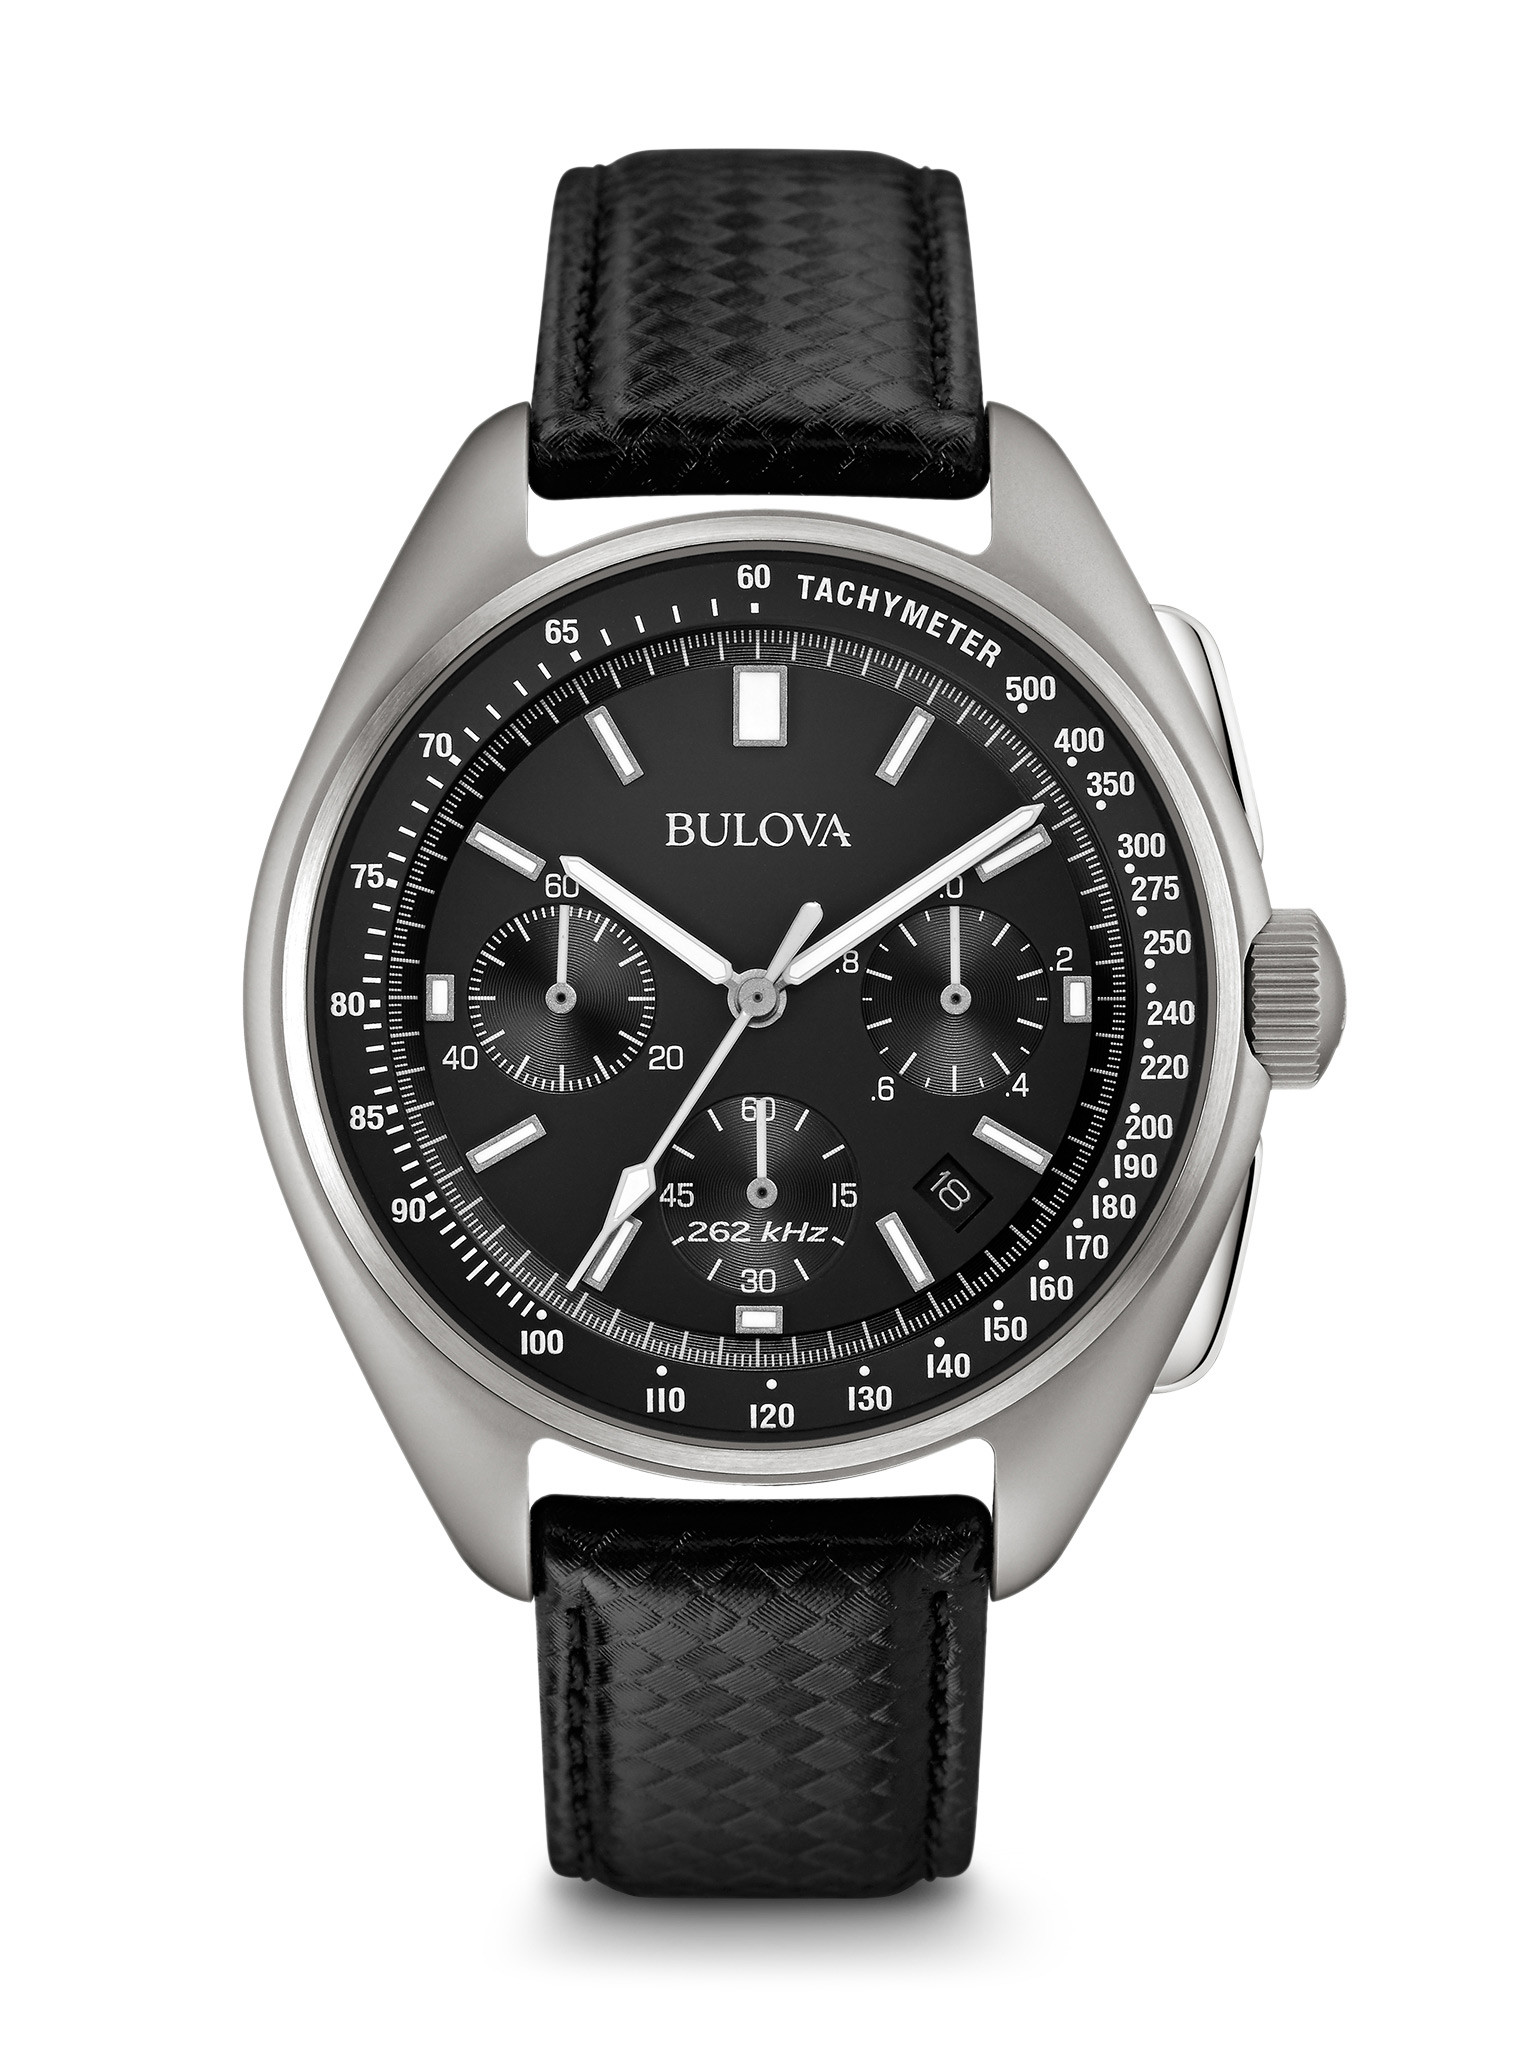 Watch review 96B251 Bulova Apollo Moon watch